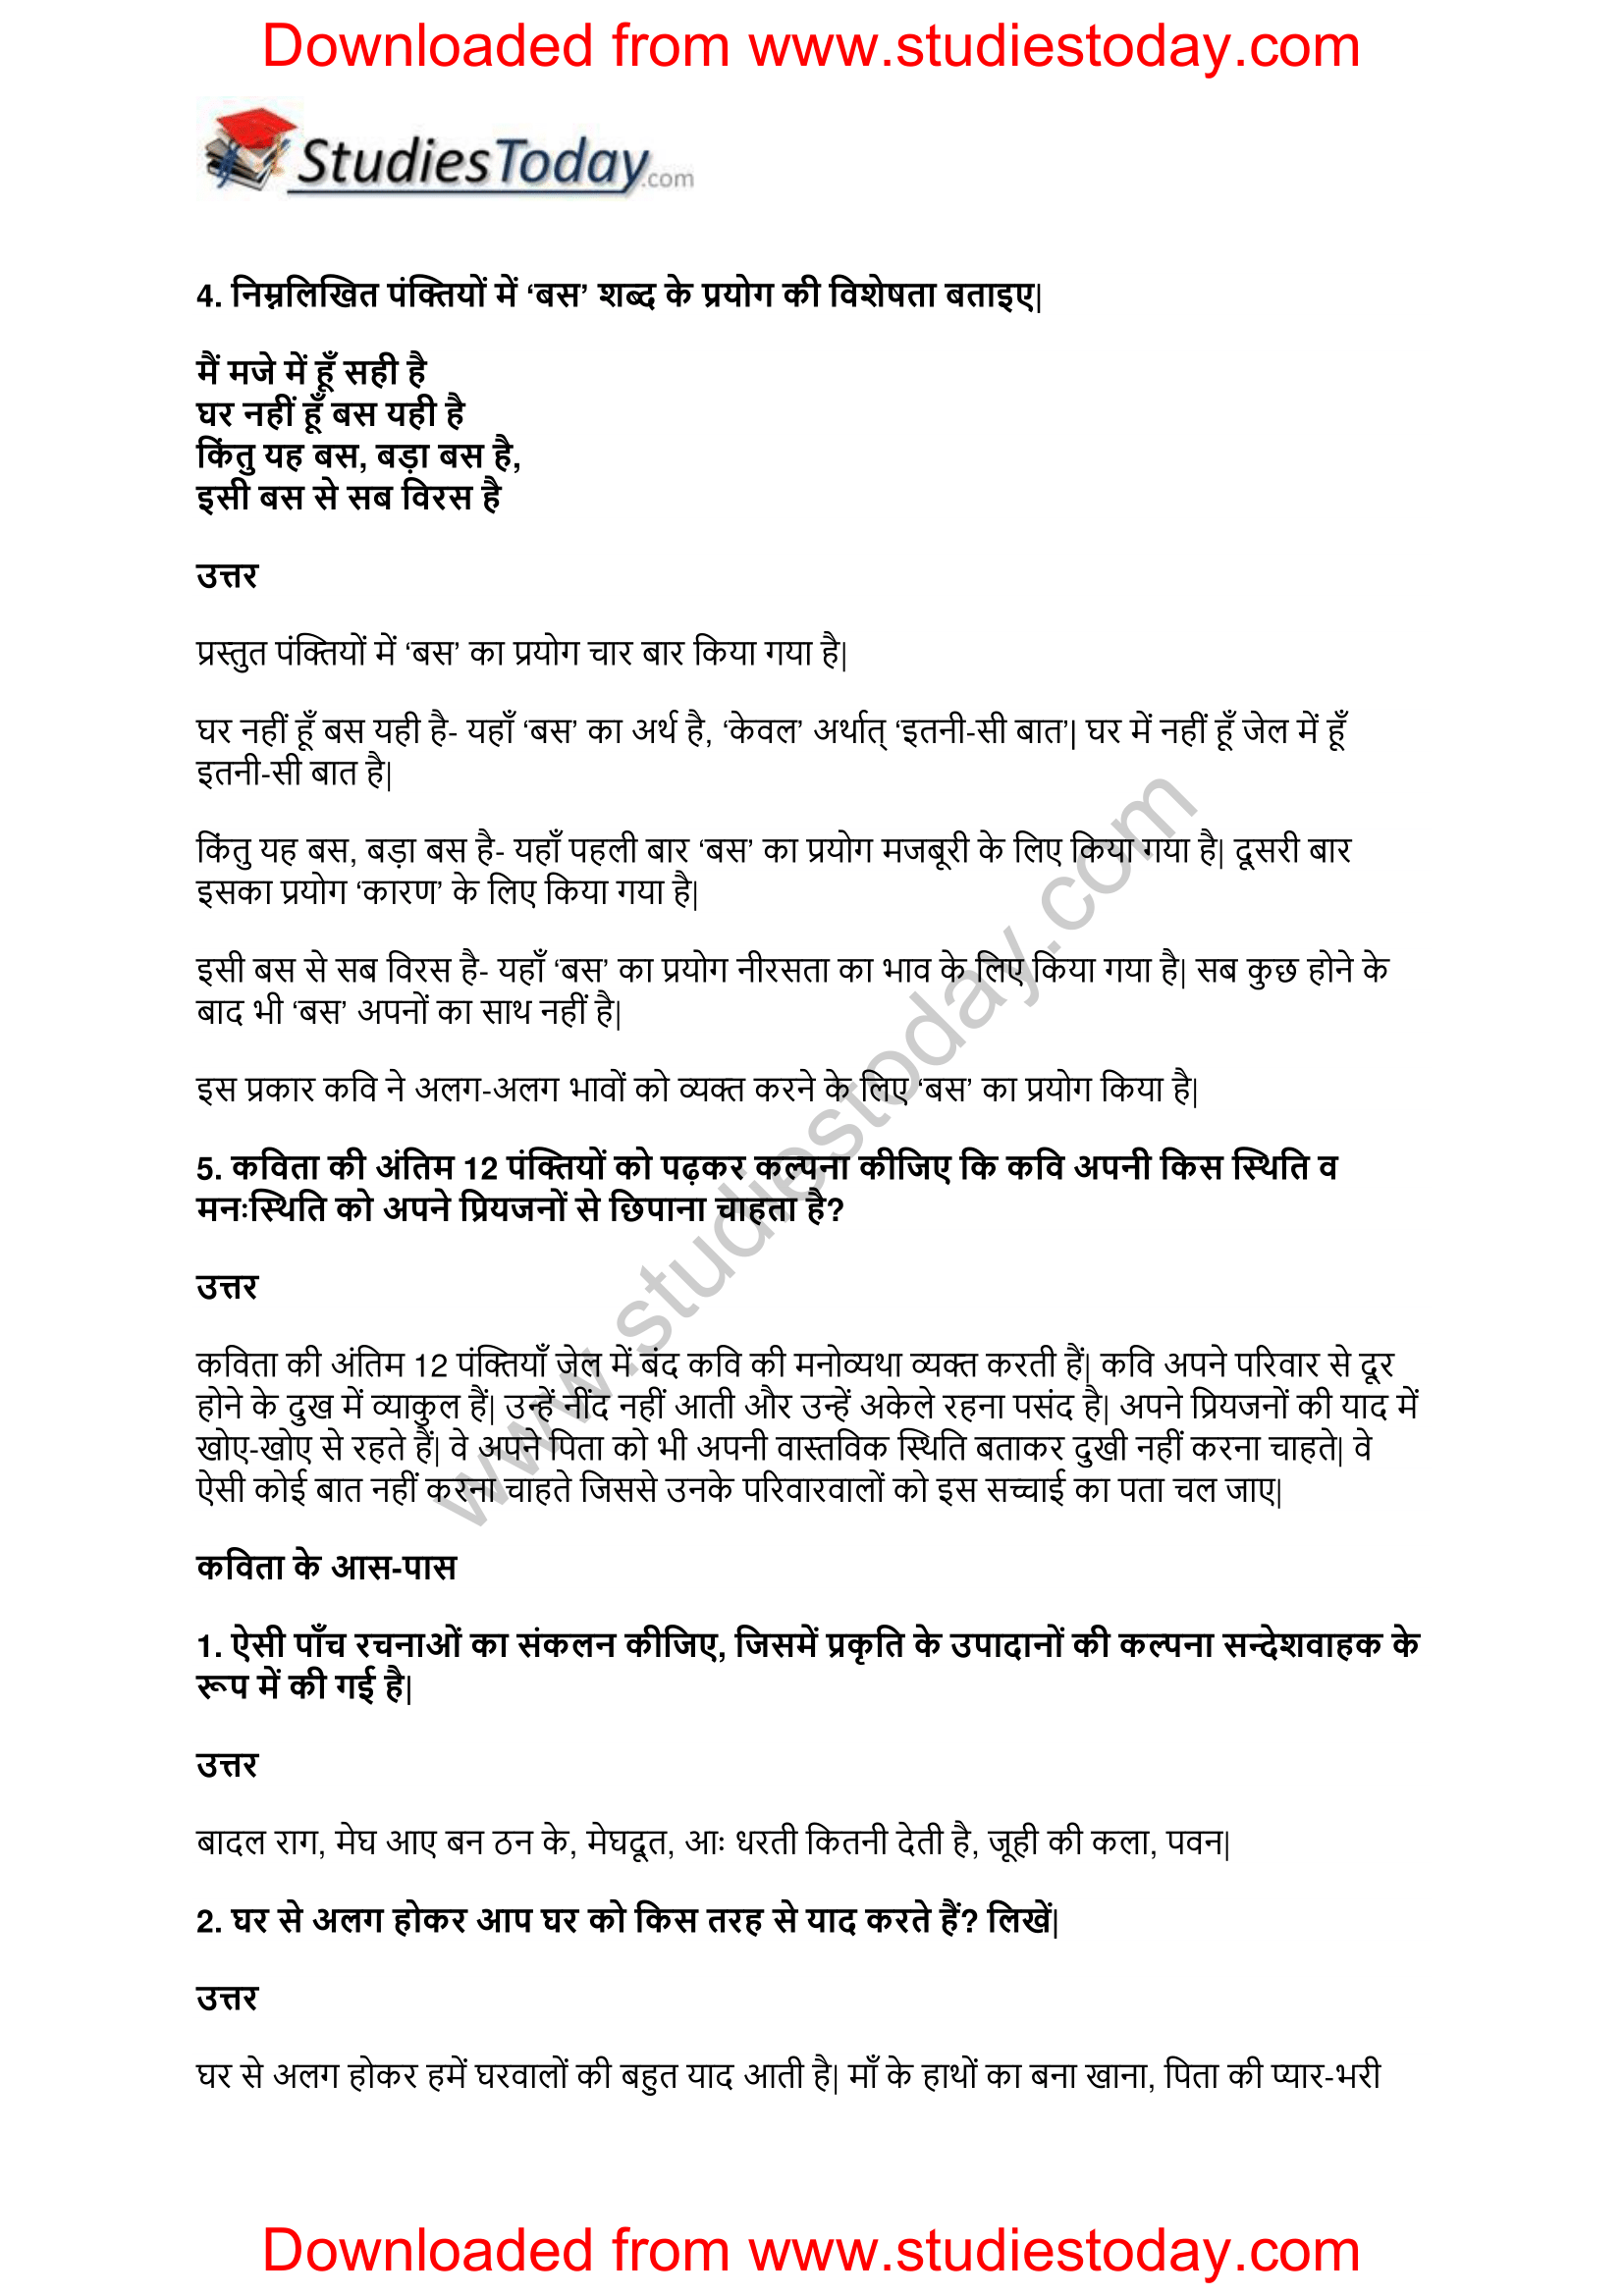 NCERT-Solutions-Class-11-Hindi-Aroh-Poem-Bhawani-Prasad-Mishra-2